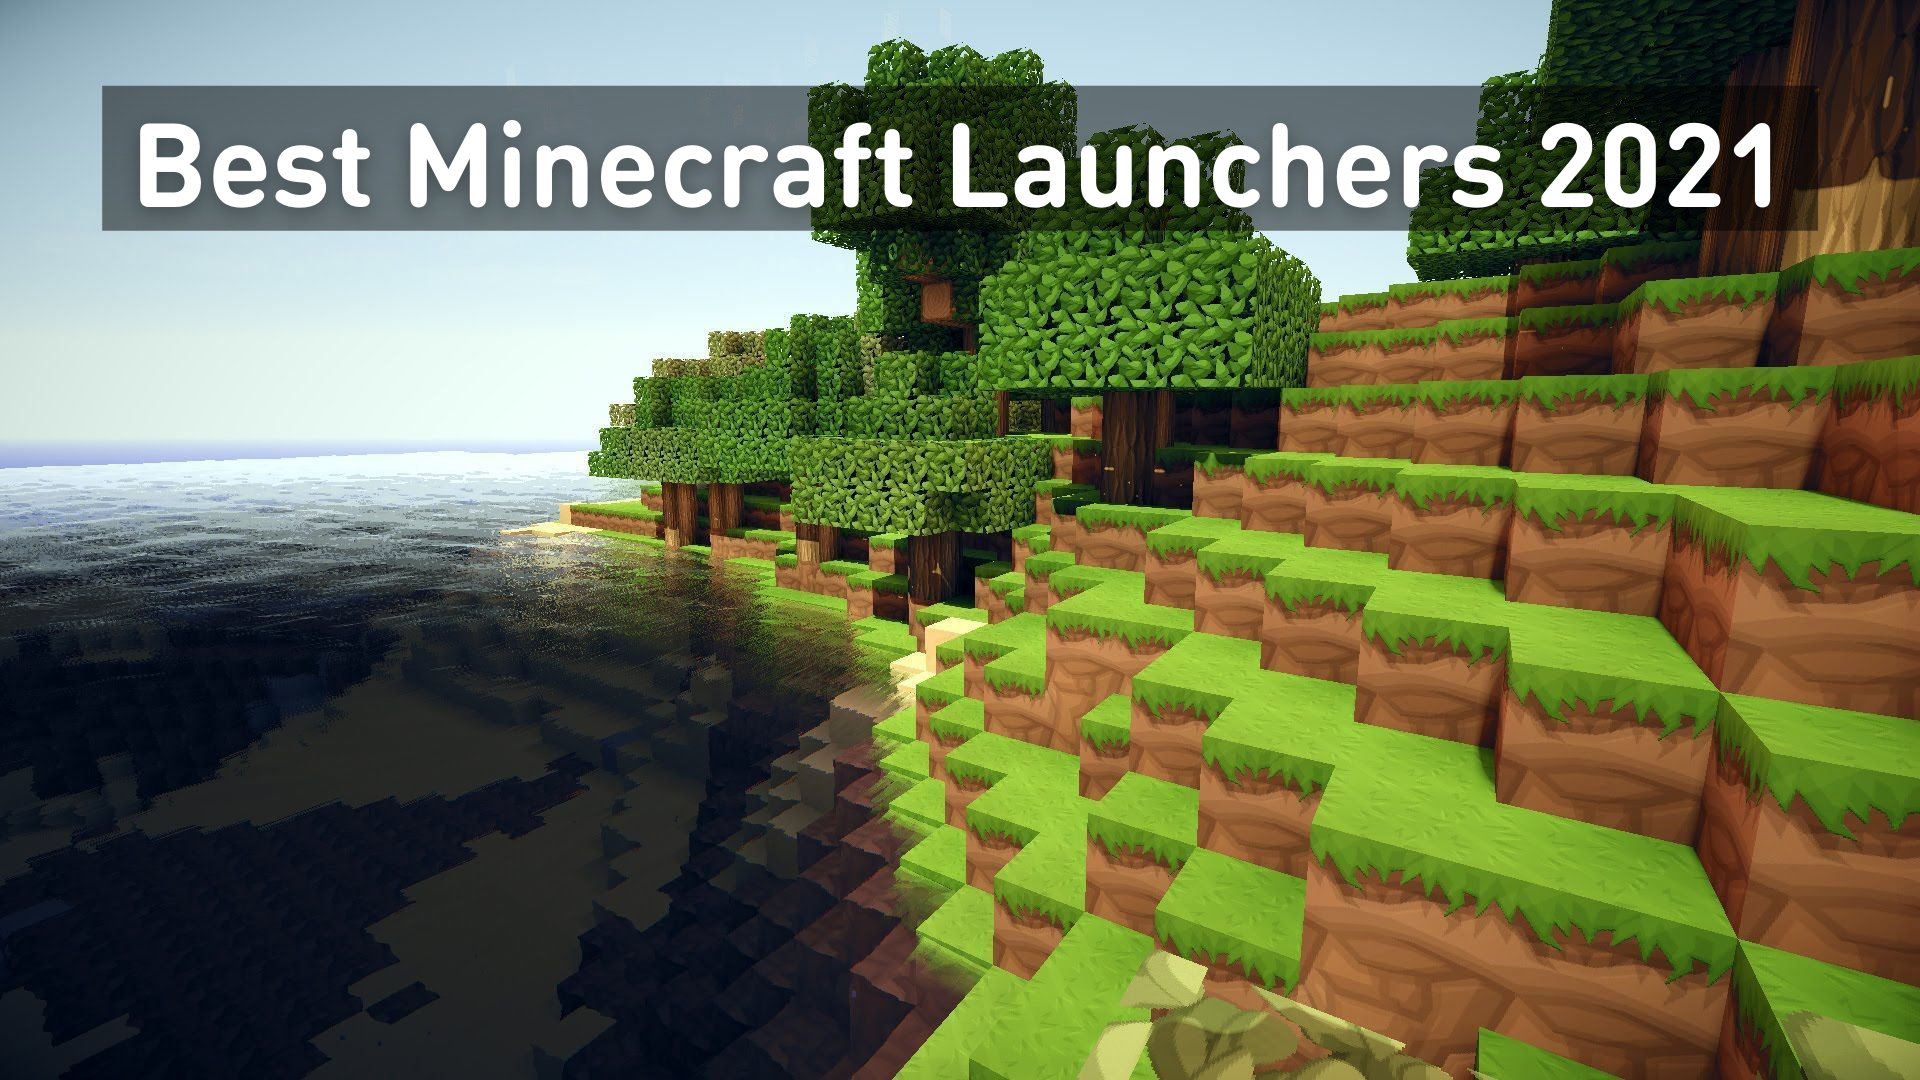 New Minecraft Launcher - How to Revert back to Original Launcher